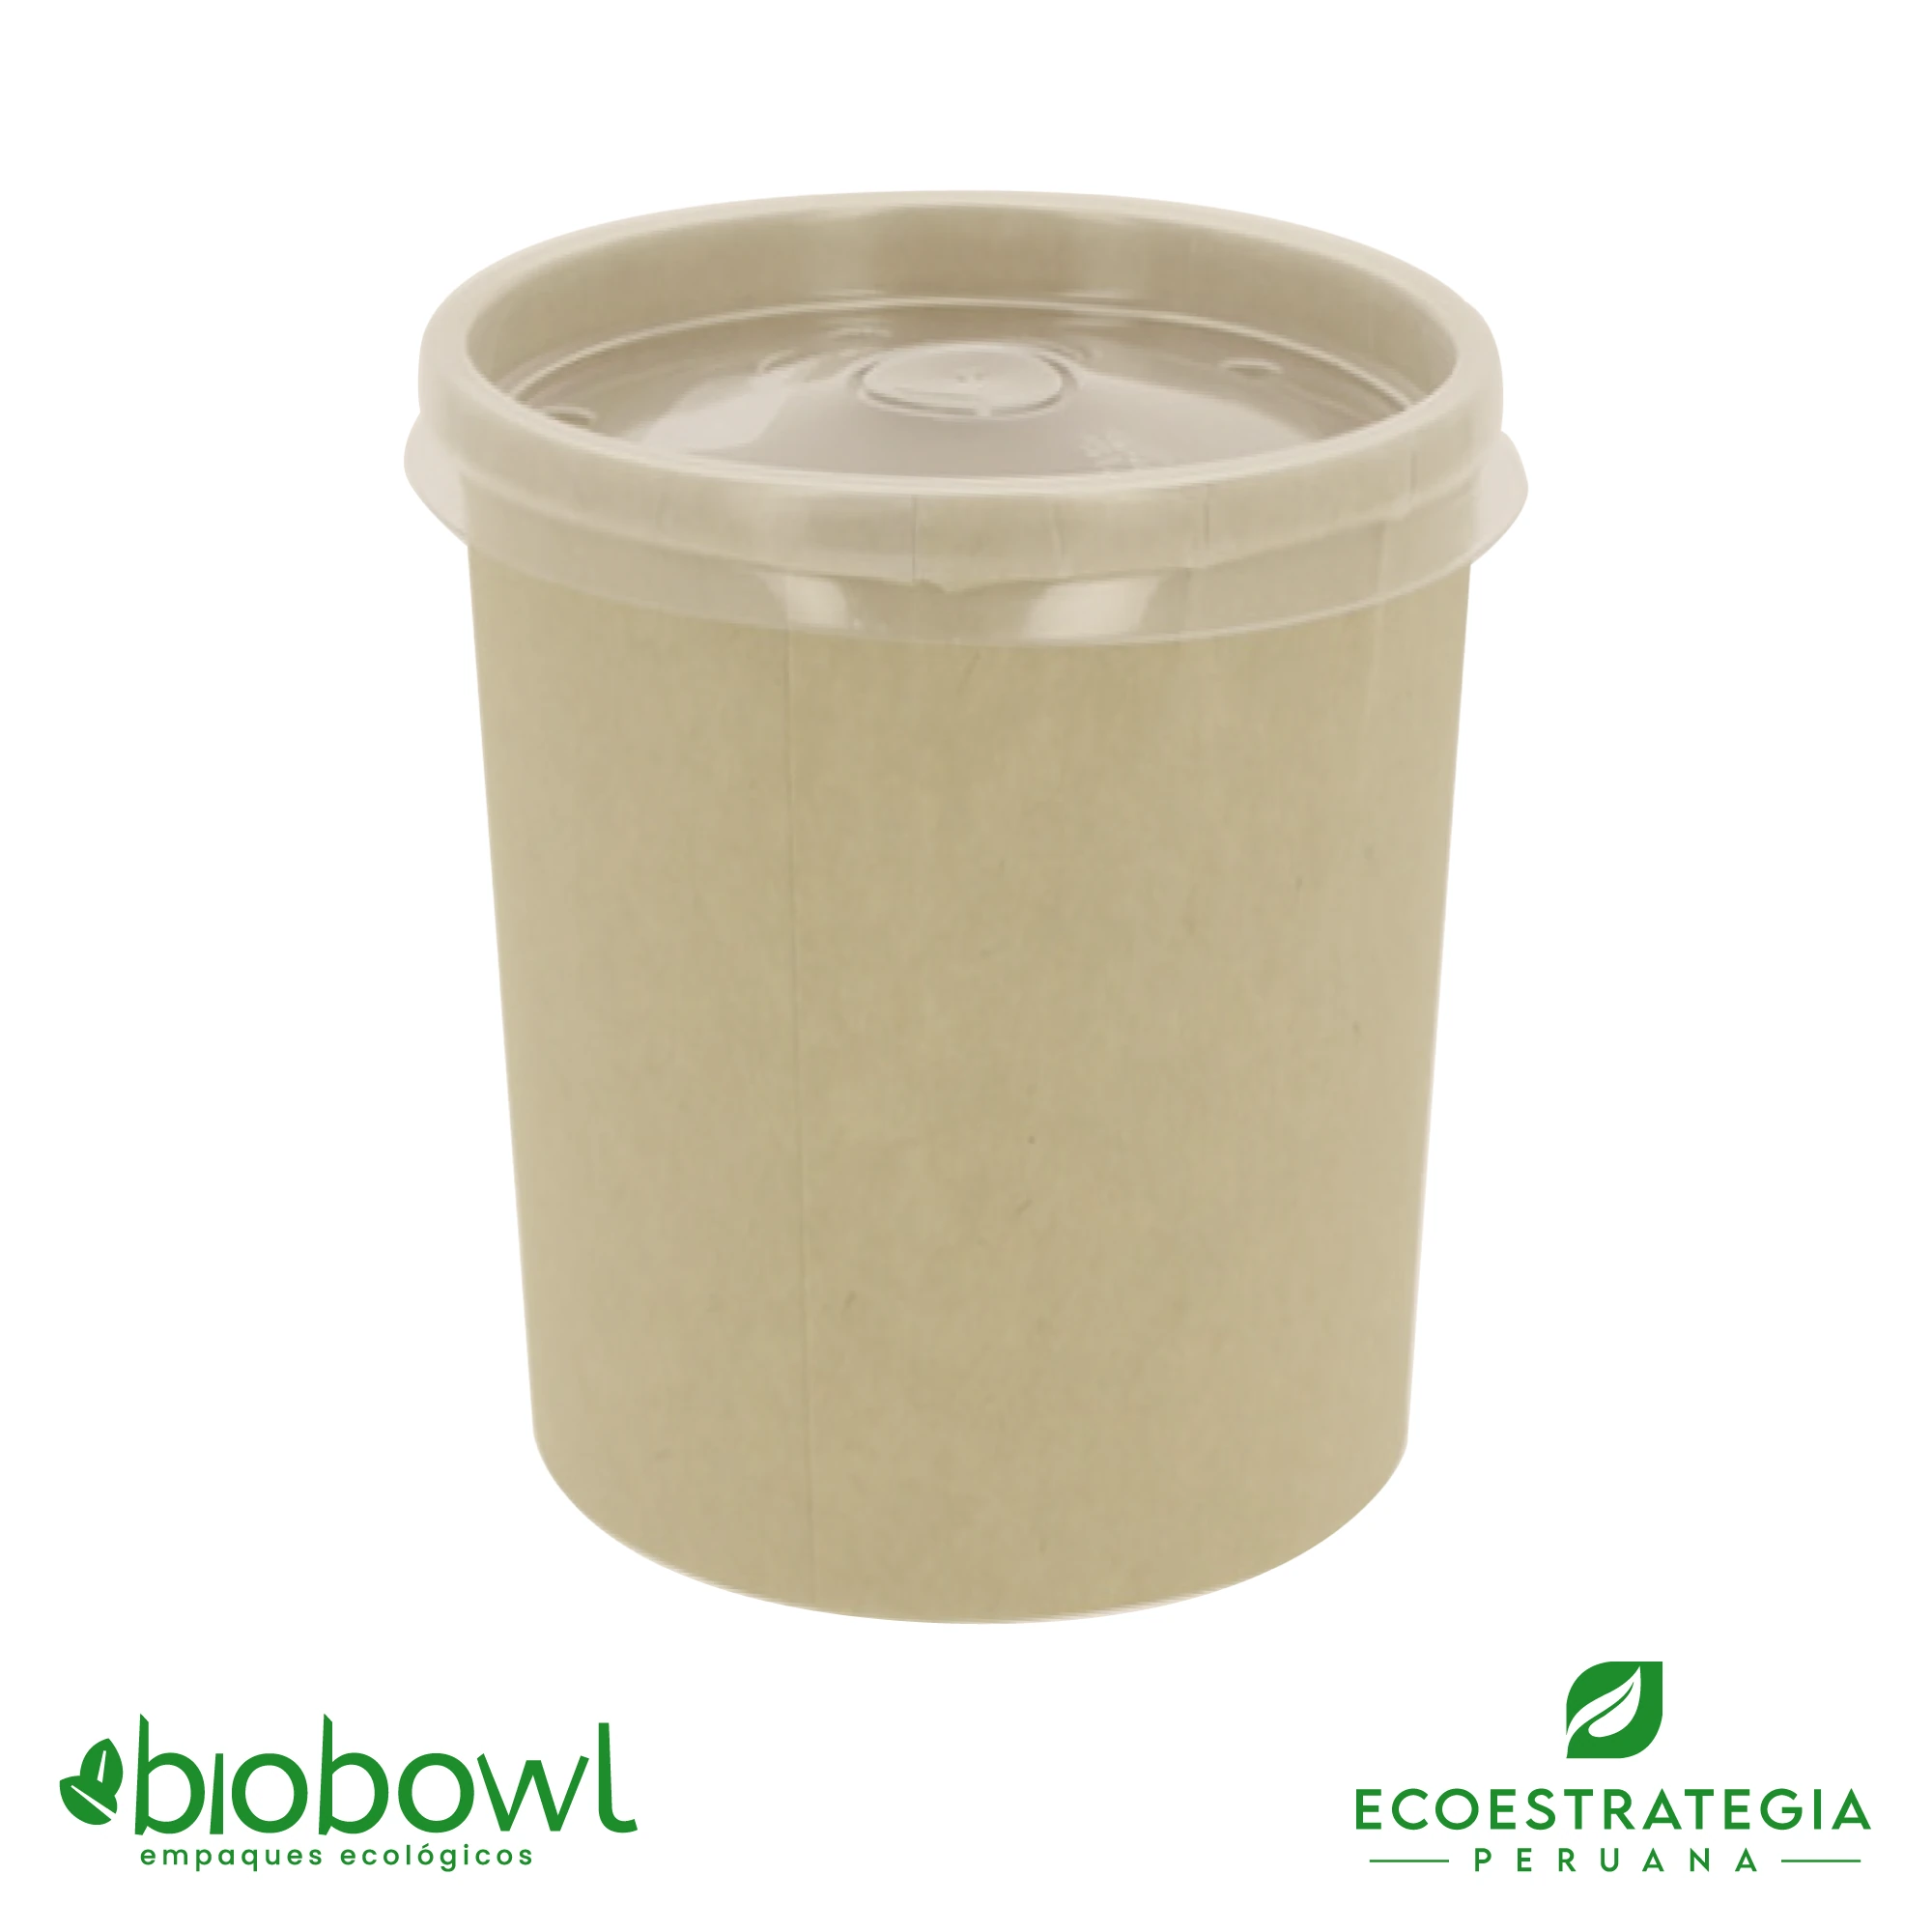 Este envase biodegradable es un bowl 32oz hecho de bambú. Envases descartables con gramaje ideal, cotiza tus vasos para helados, táper para sopa, bowls sopero